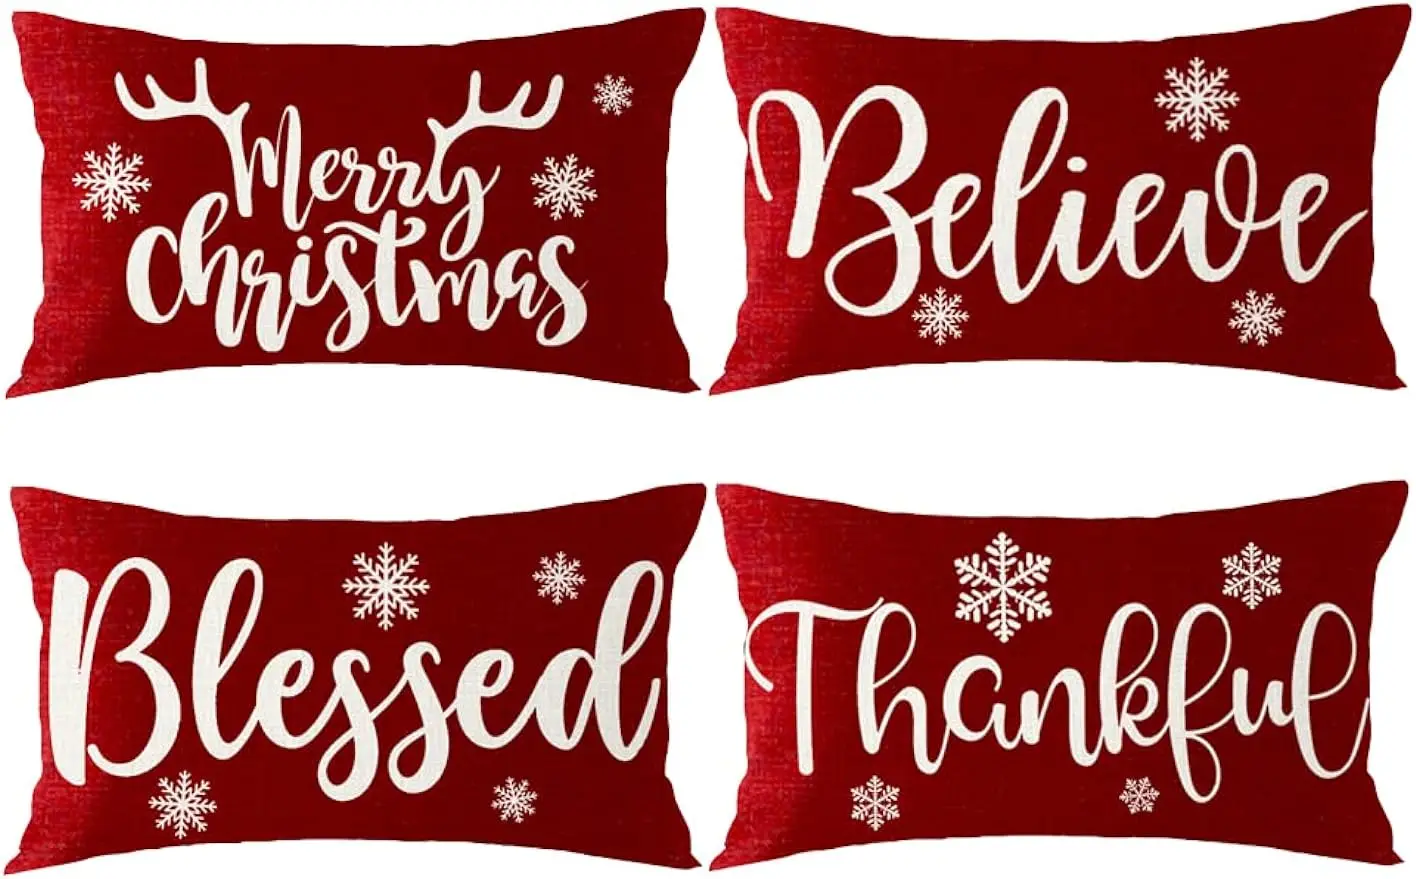 

Merry Christmas believe blessings waist trim pillowcase cushion cover sofa holiday outdoor décor pillow cover 30X50cm